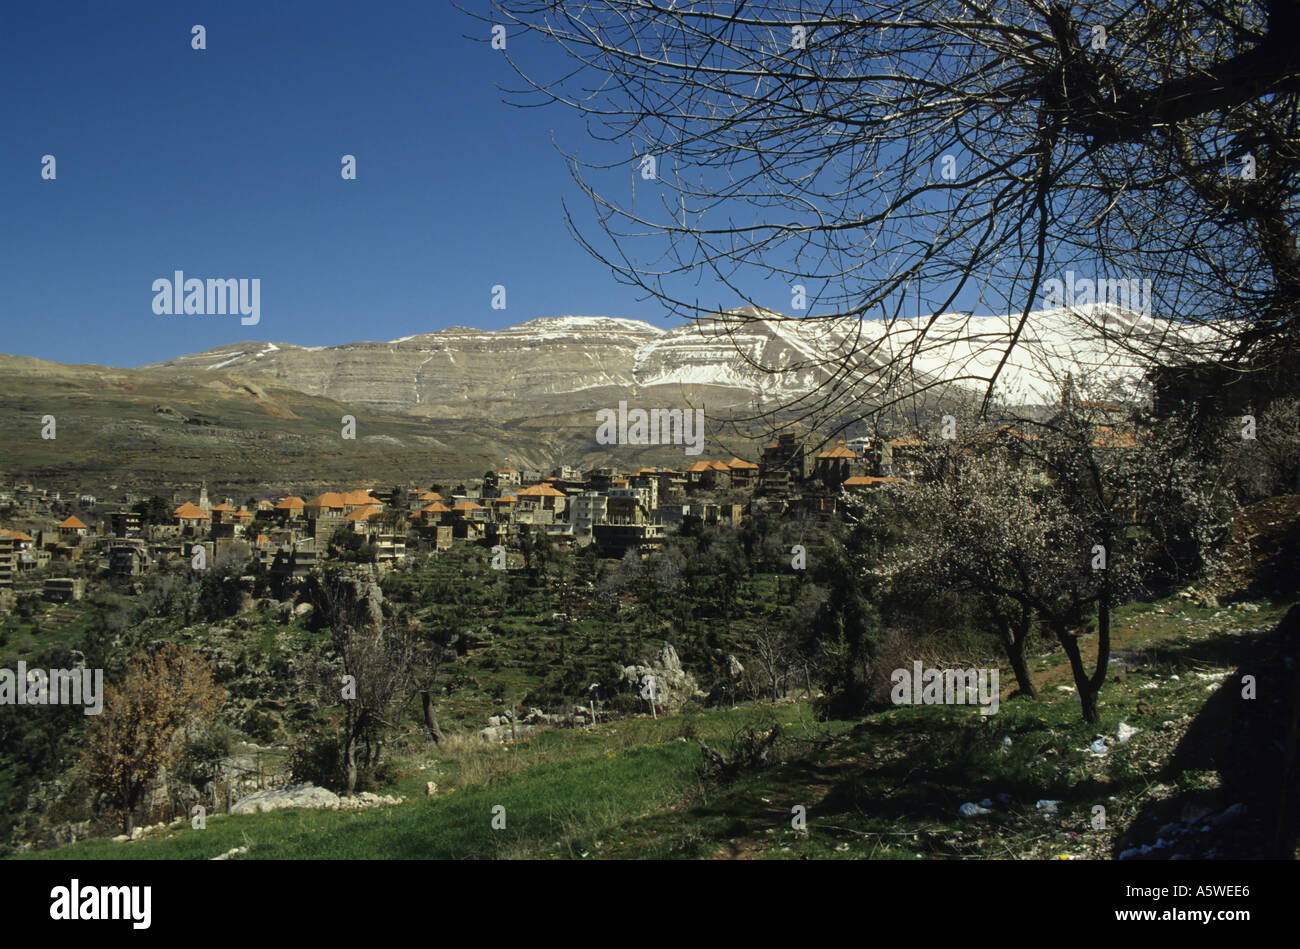 Libanon - Bcharre Dorf in den libanesischen Bergen im Frühling Stockfoto